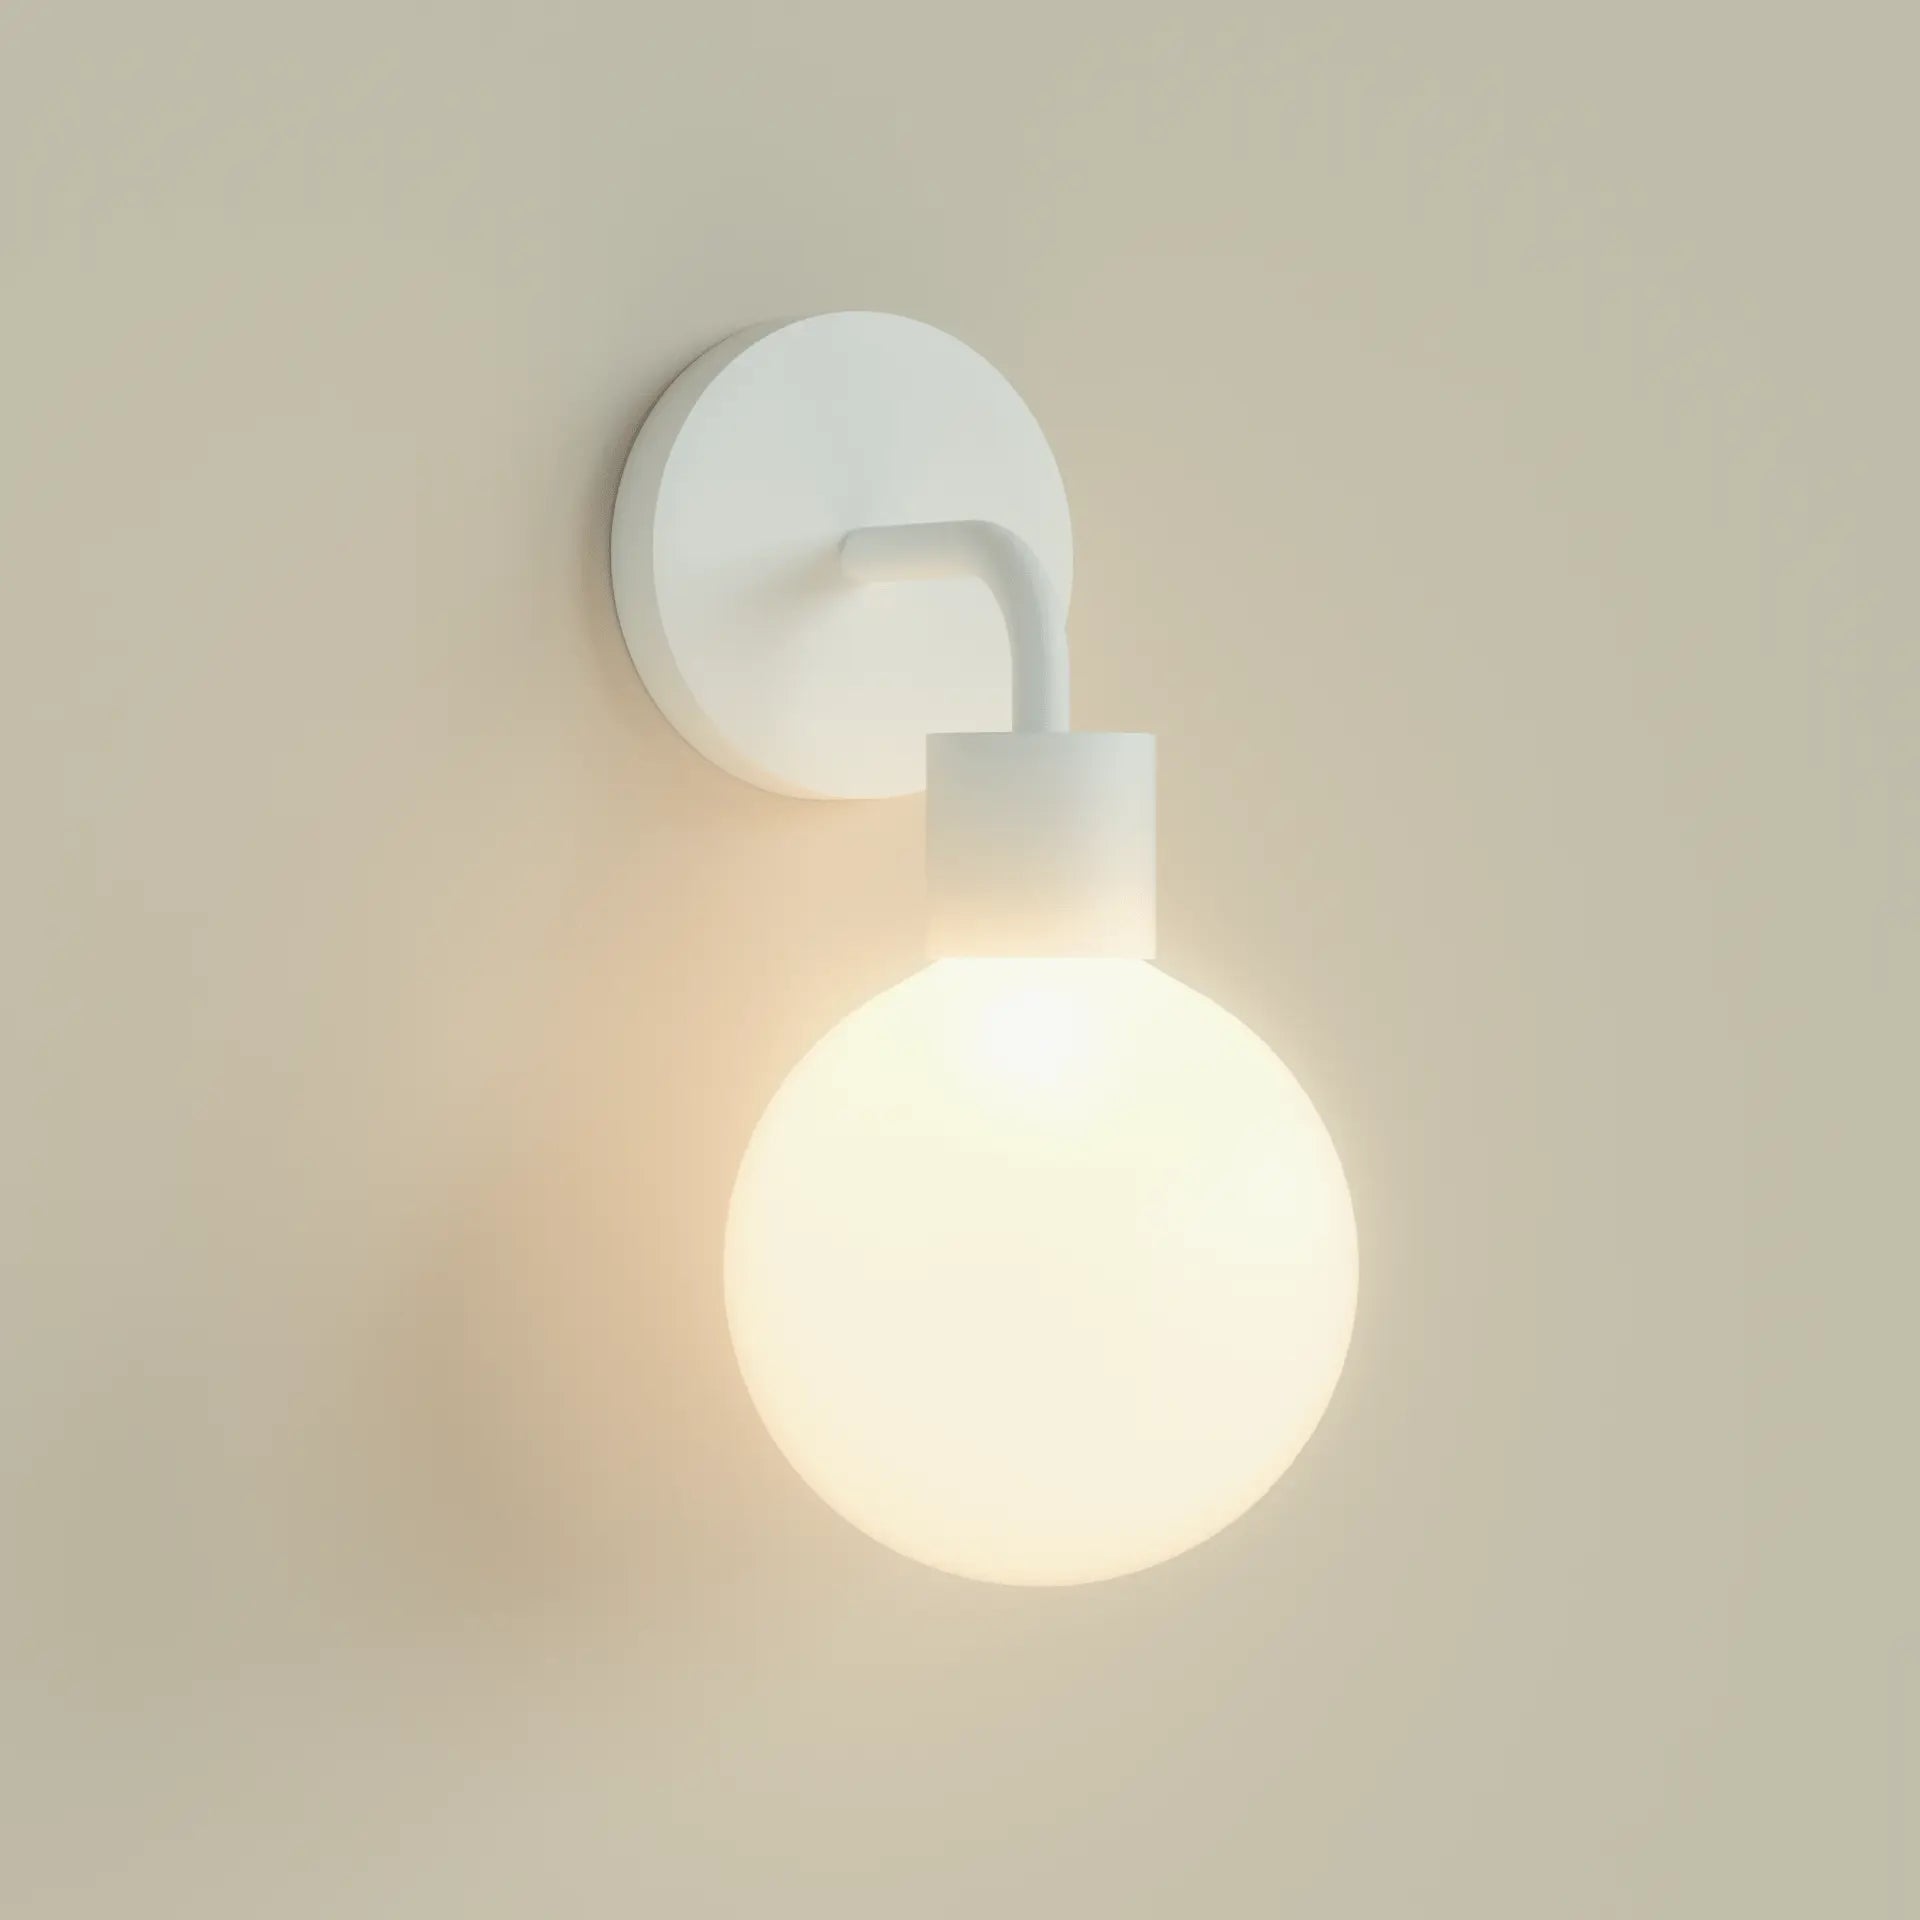 White renter friendly wall light